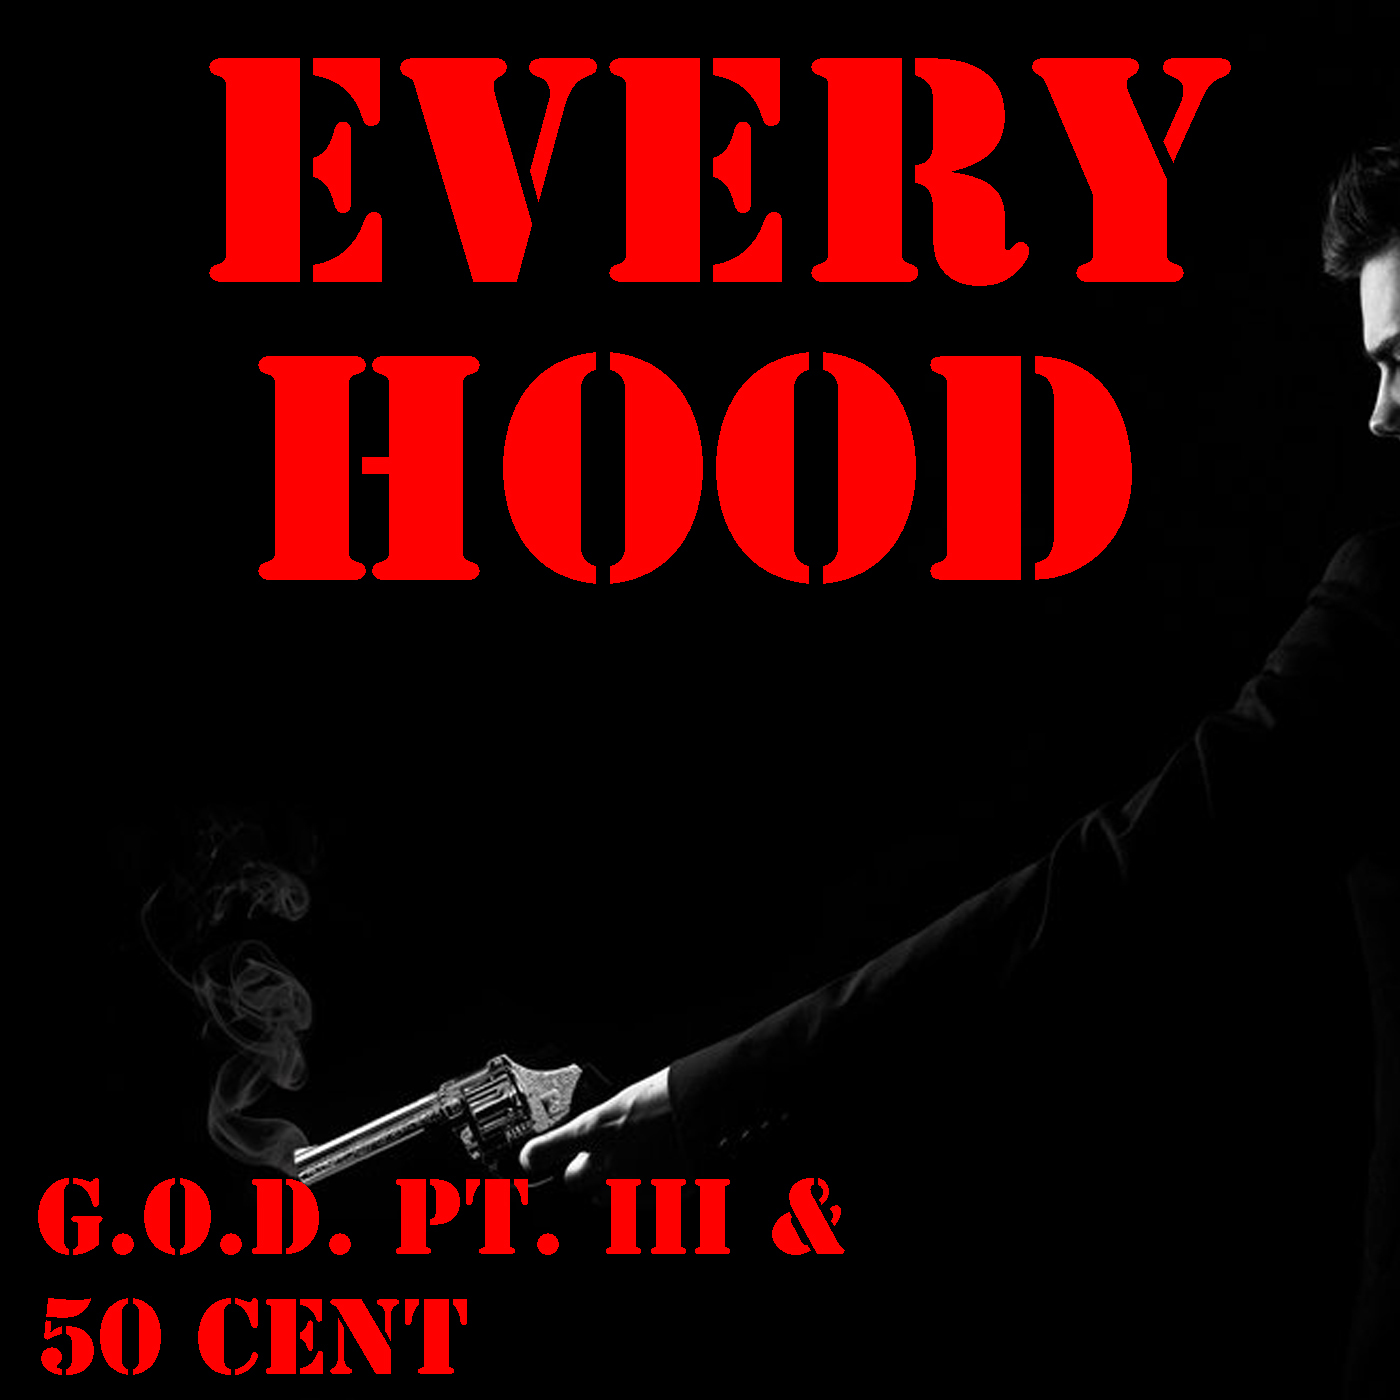 Every Hood